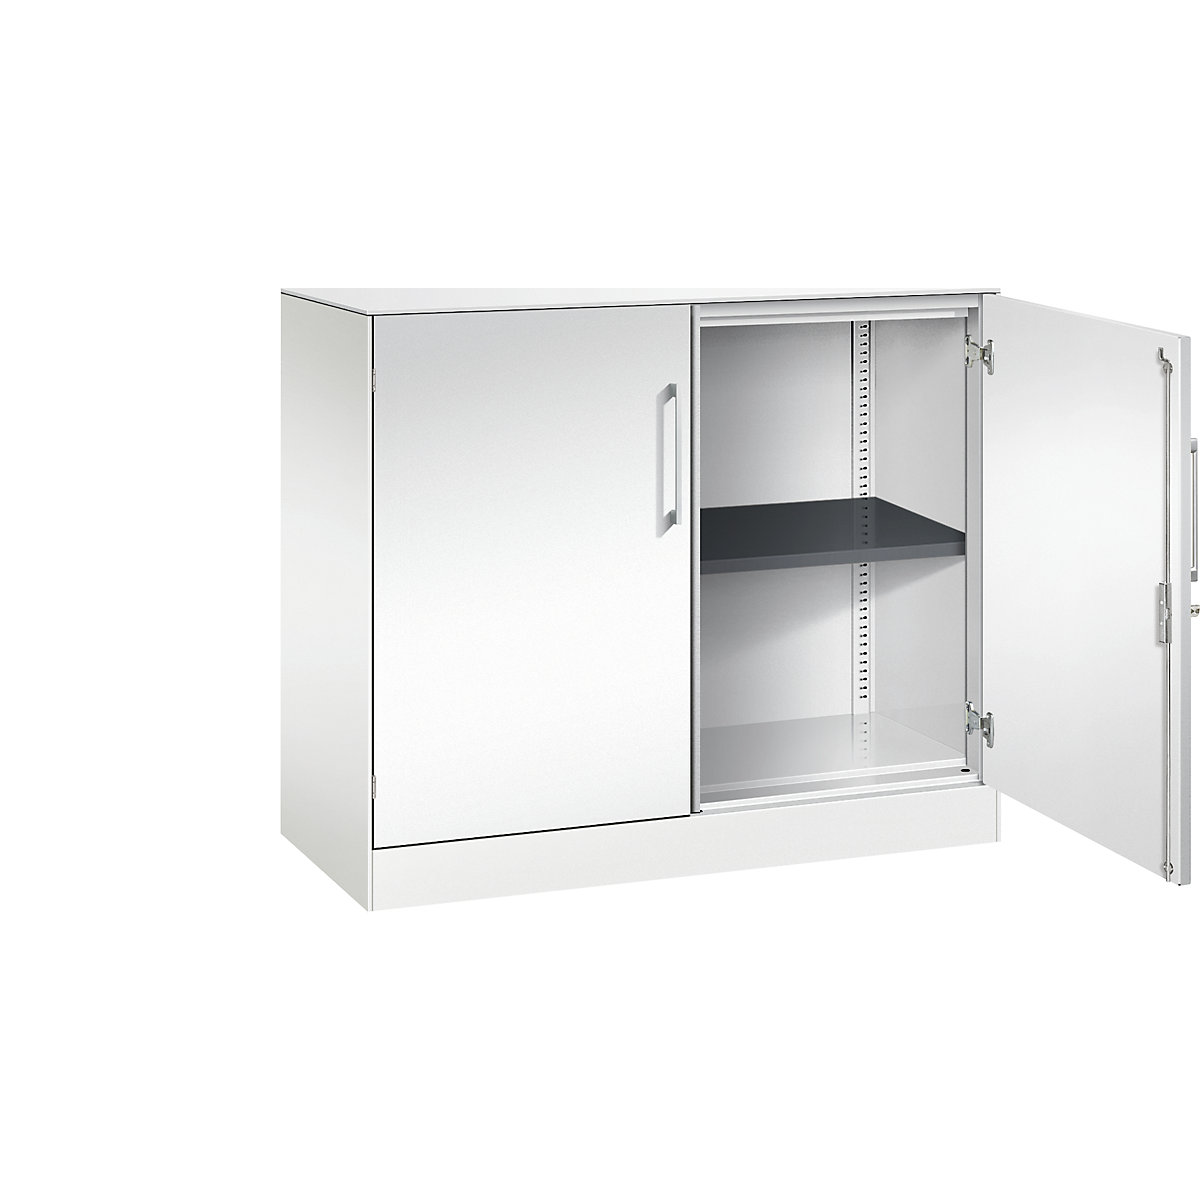 ASISTO double door cupboard, height 897 mm – C+P, width 1000 mm, 1 shelf, traffic white/traffic white-14